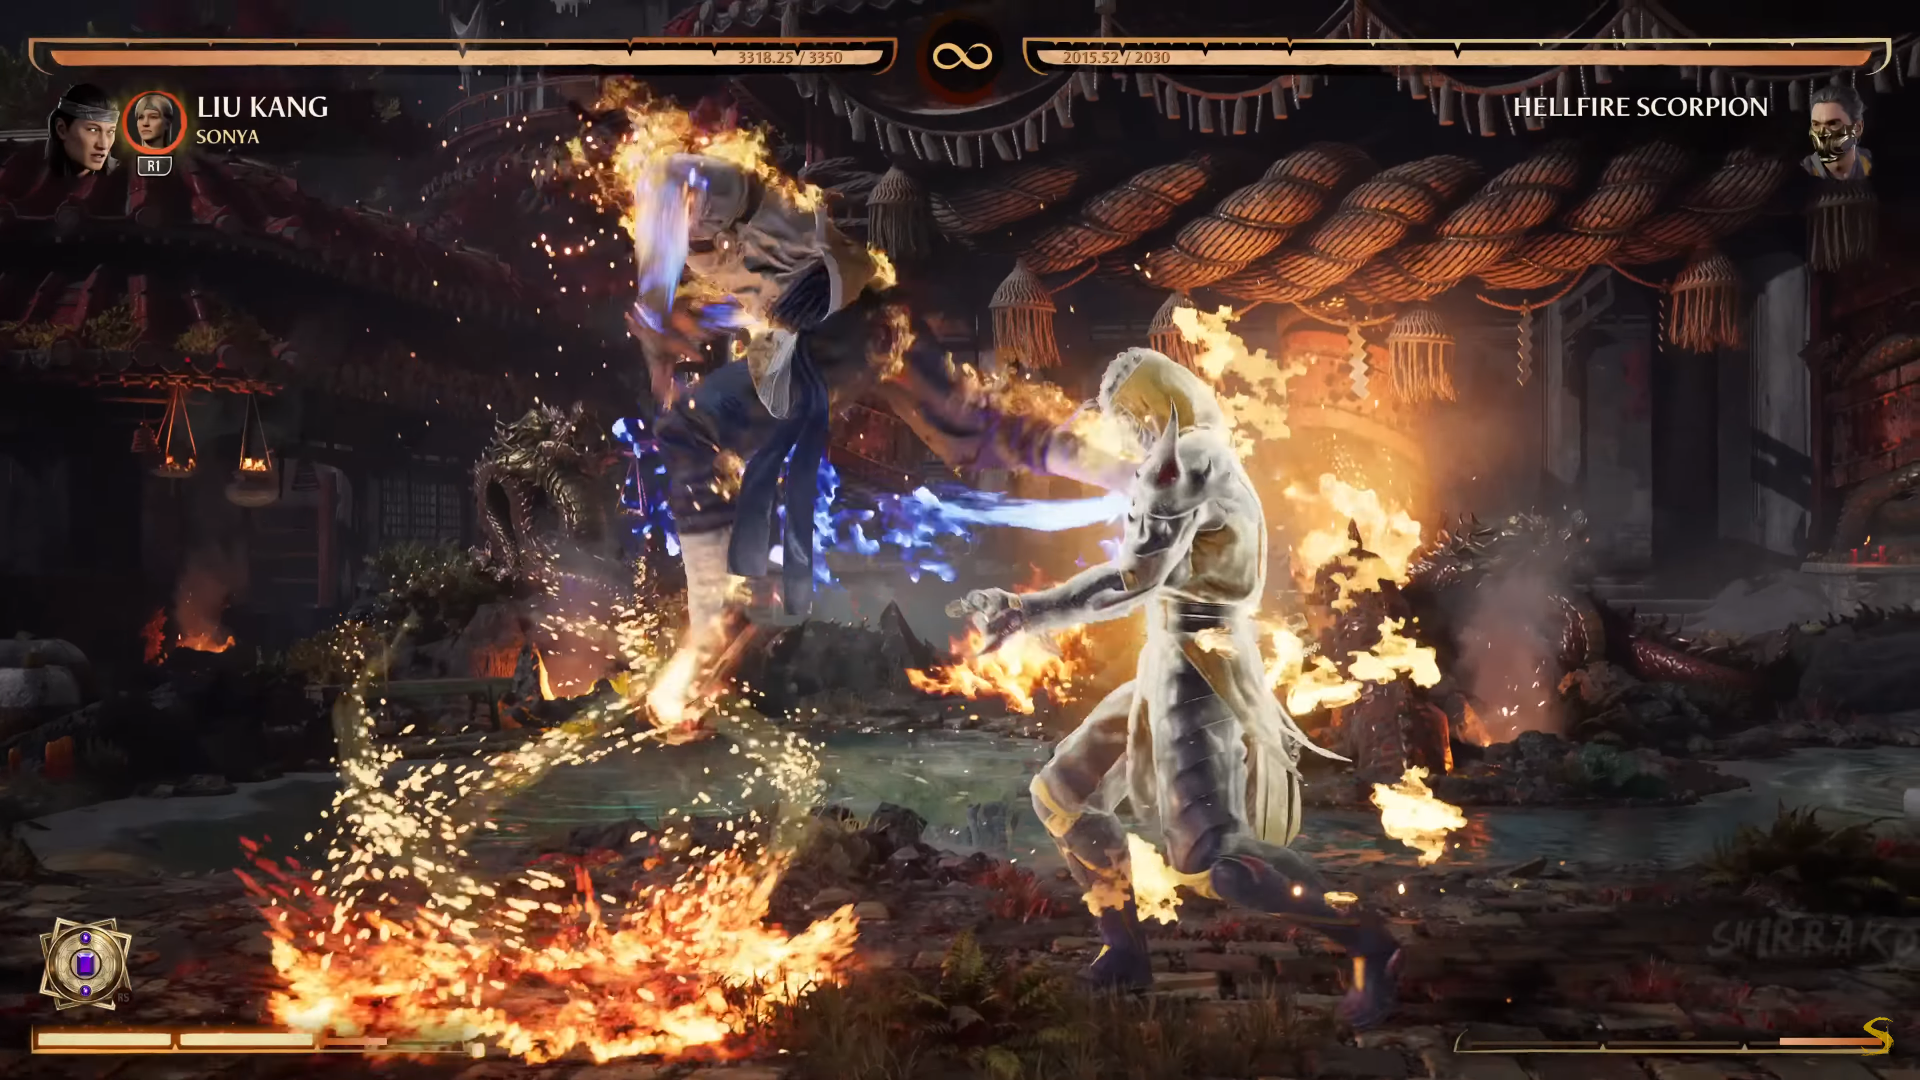 A screenshot of phase 2 of the Hellfire Scorpion boss fight in Mortal Kombat Invasion Mode. 